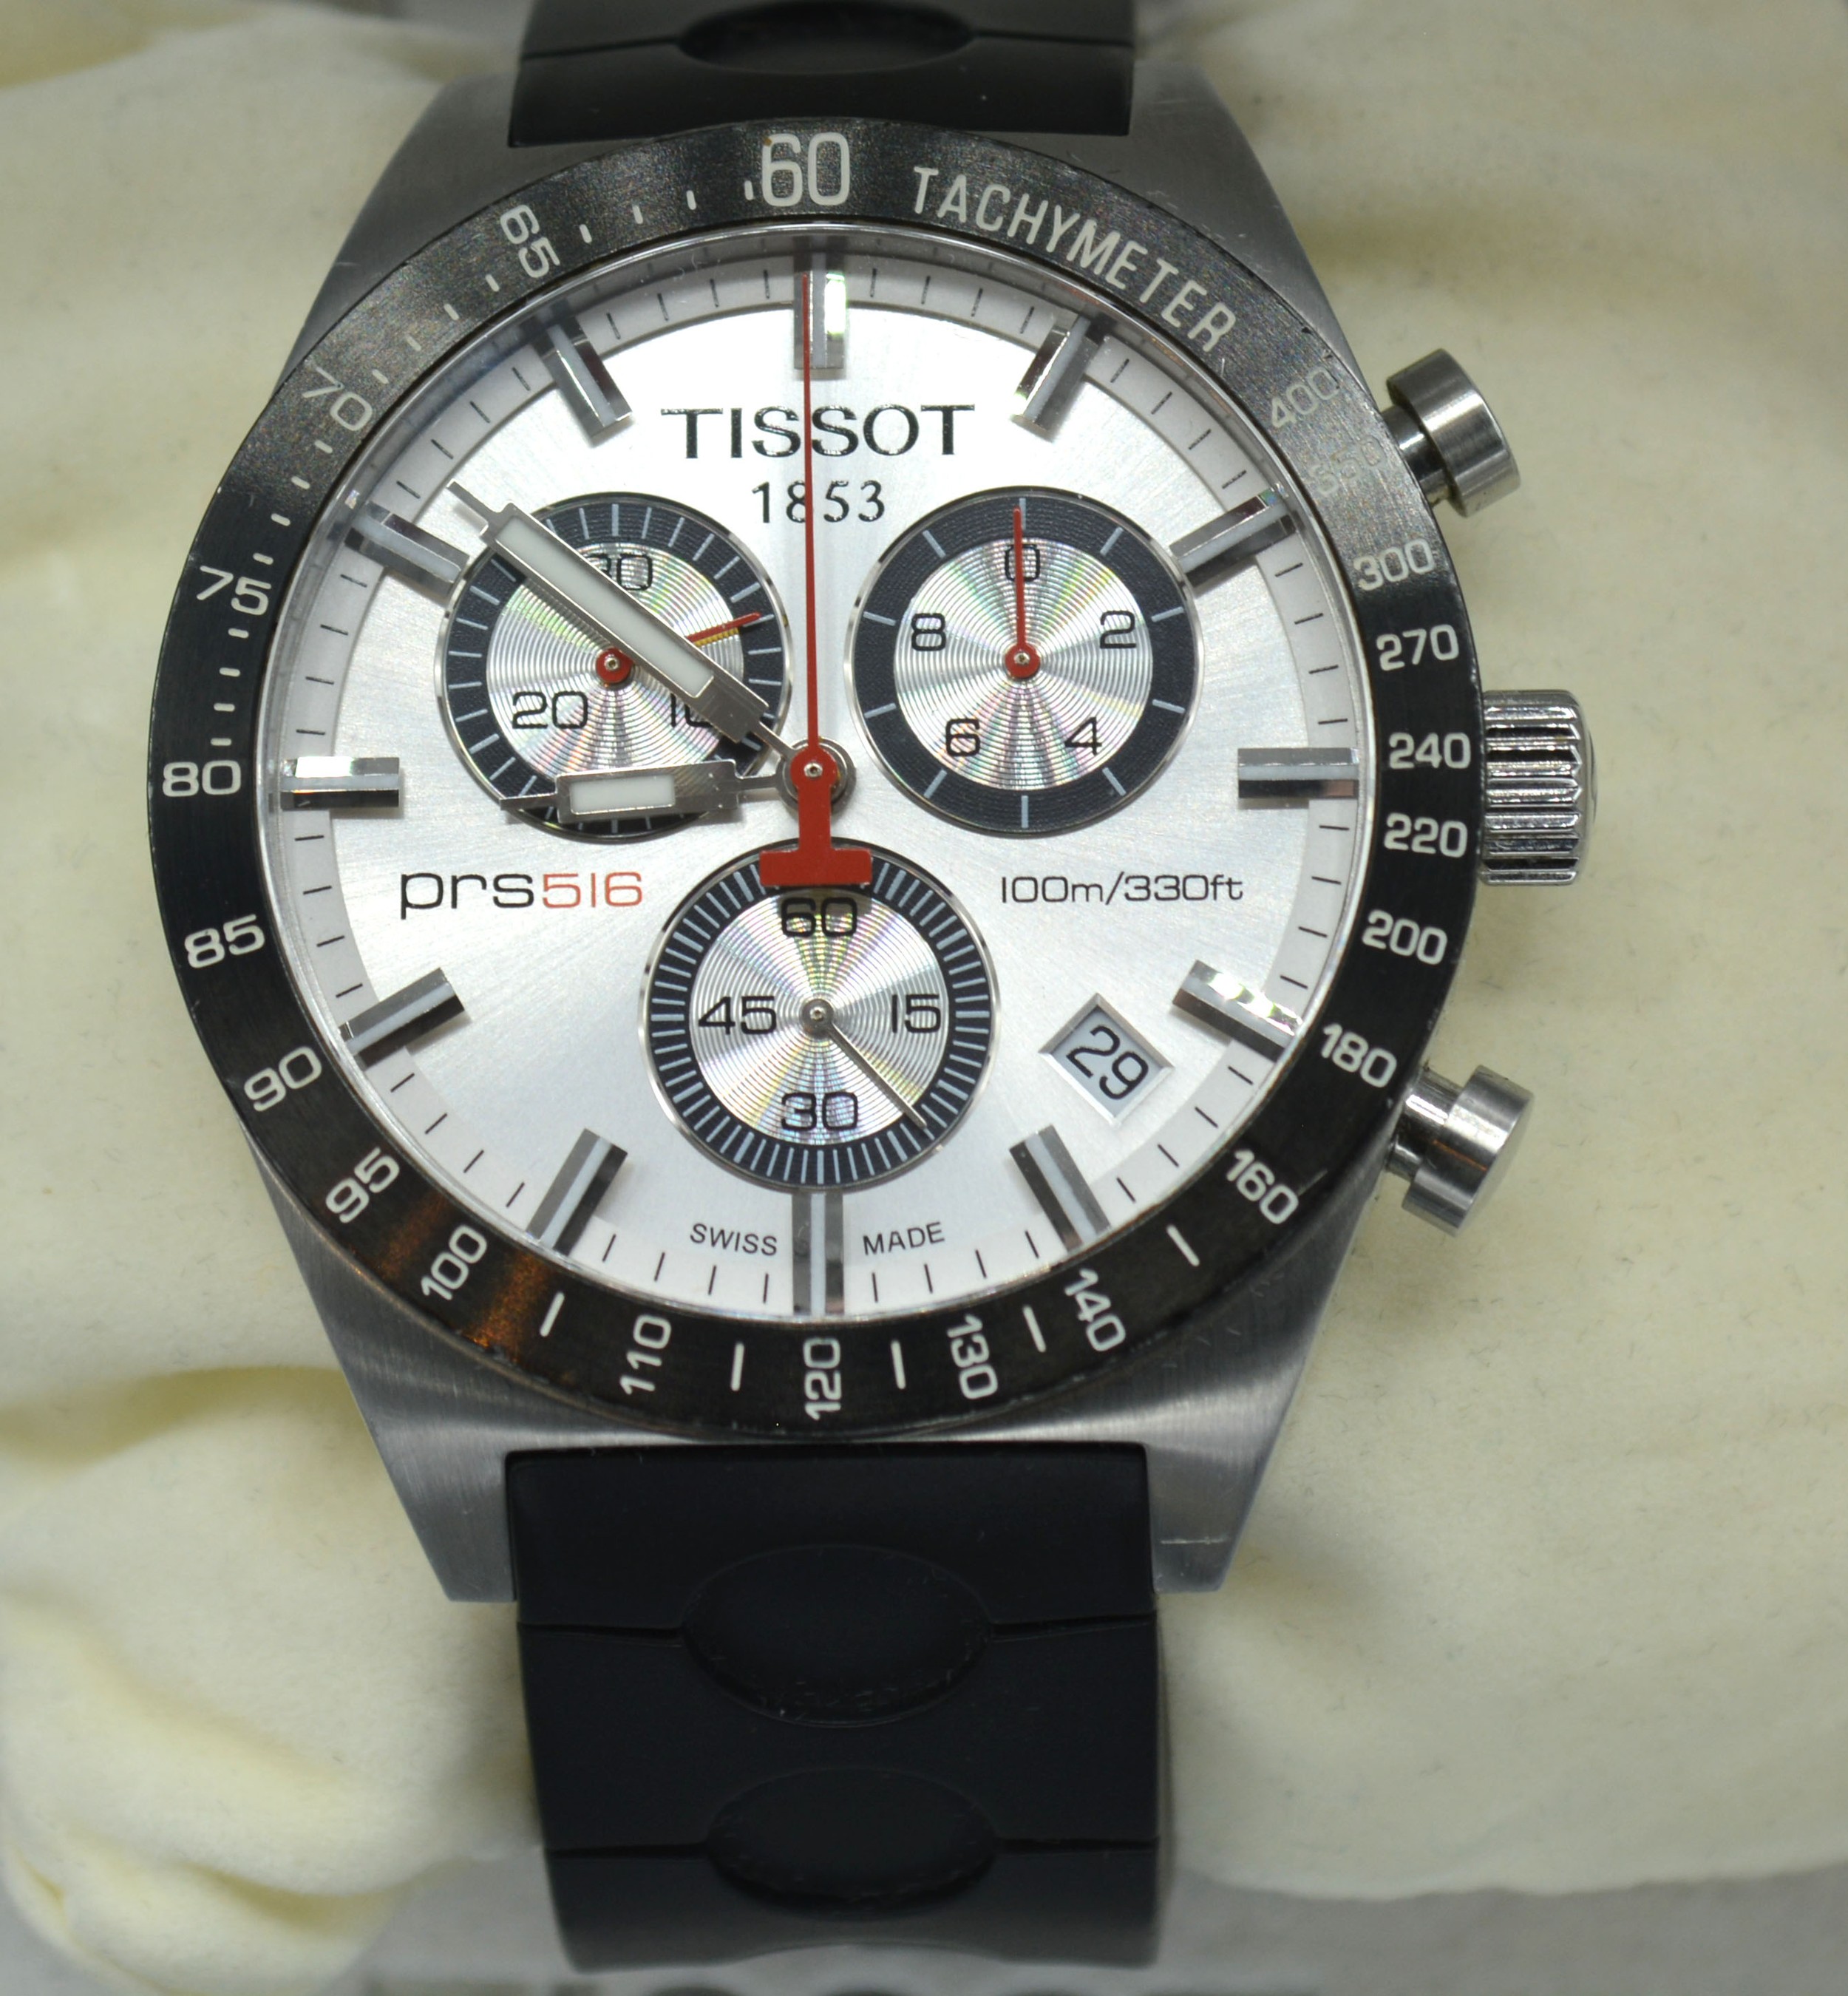 A Tissot PRS 516 Quartz Chronograph Gentleman's Wrist Watch with original box